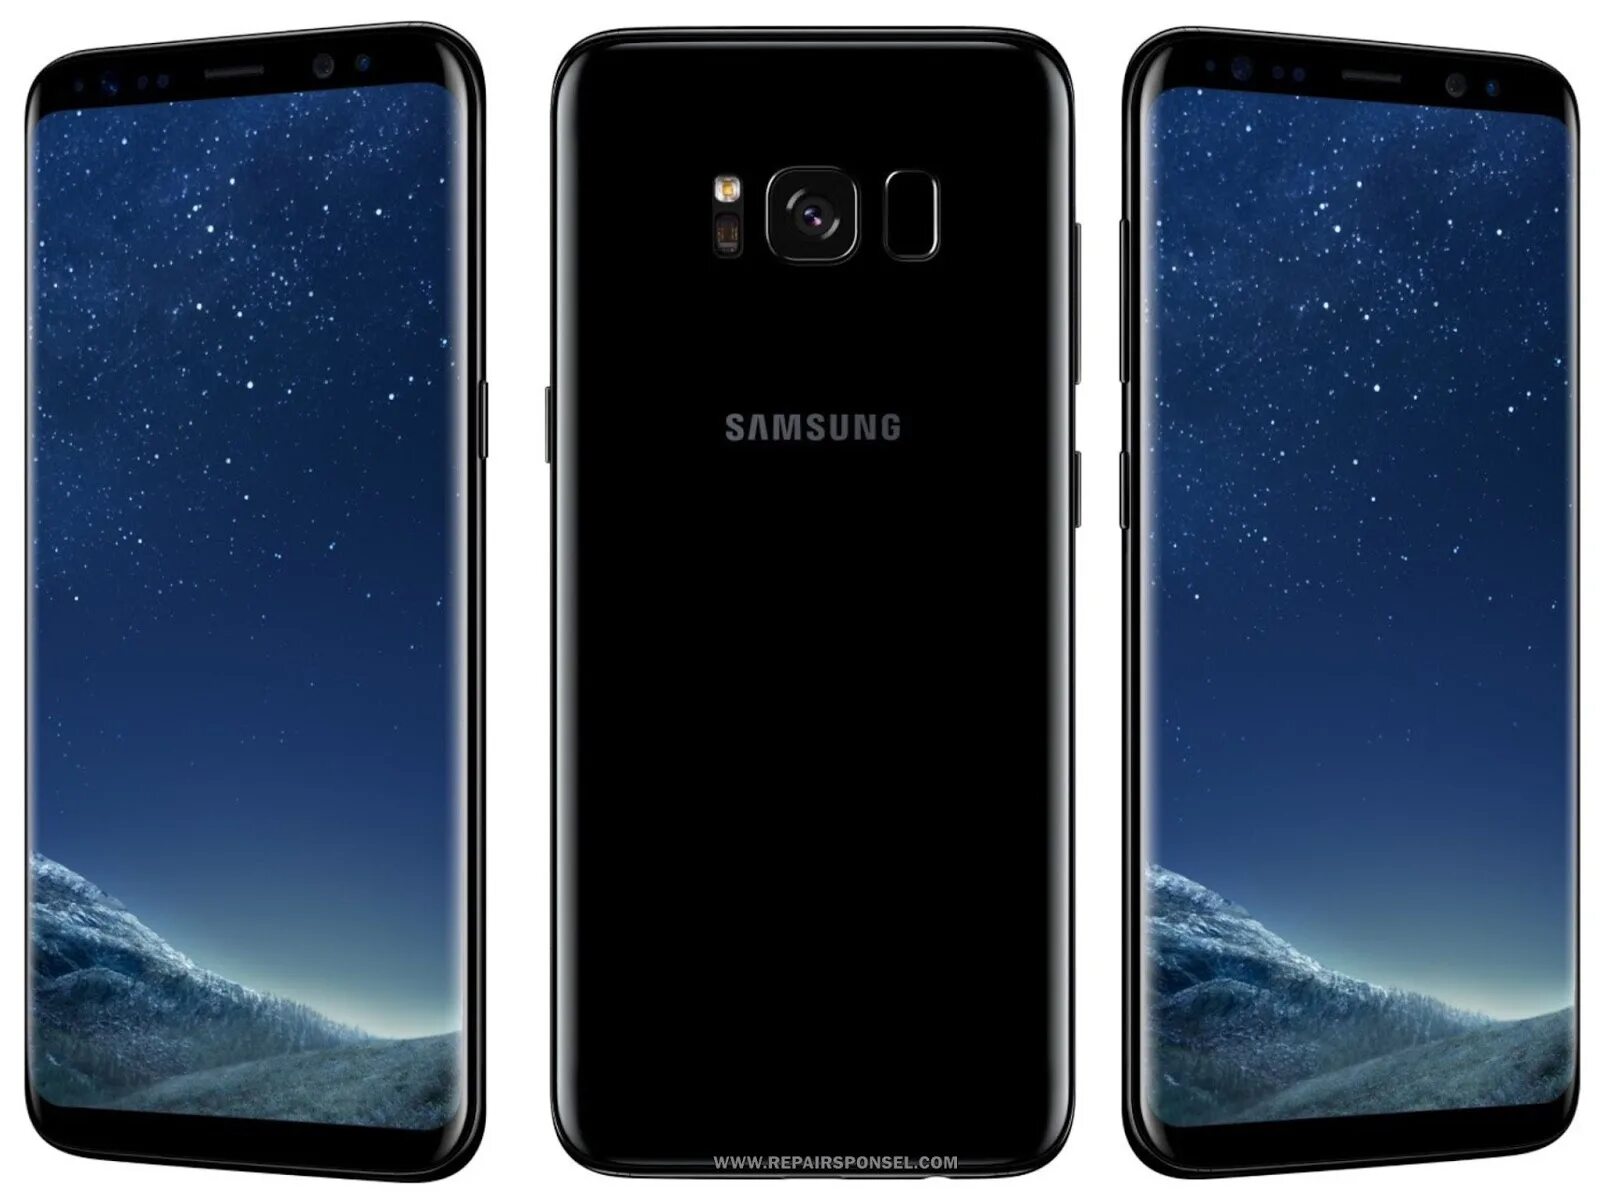 Samsung galaxy 8 4. Samsung g950 Galaxy s8. Samsung Galaxy s8 Plus. Самсунг галакси с 8. Samsung Galaxy s8+ 128gb.